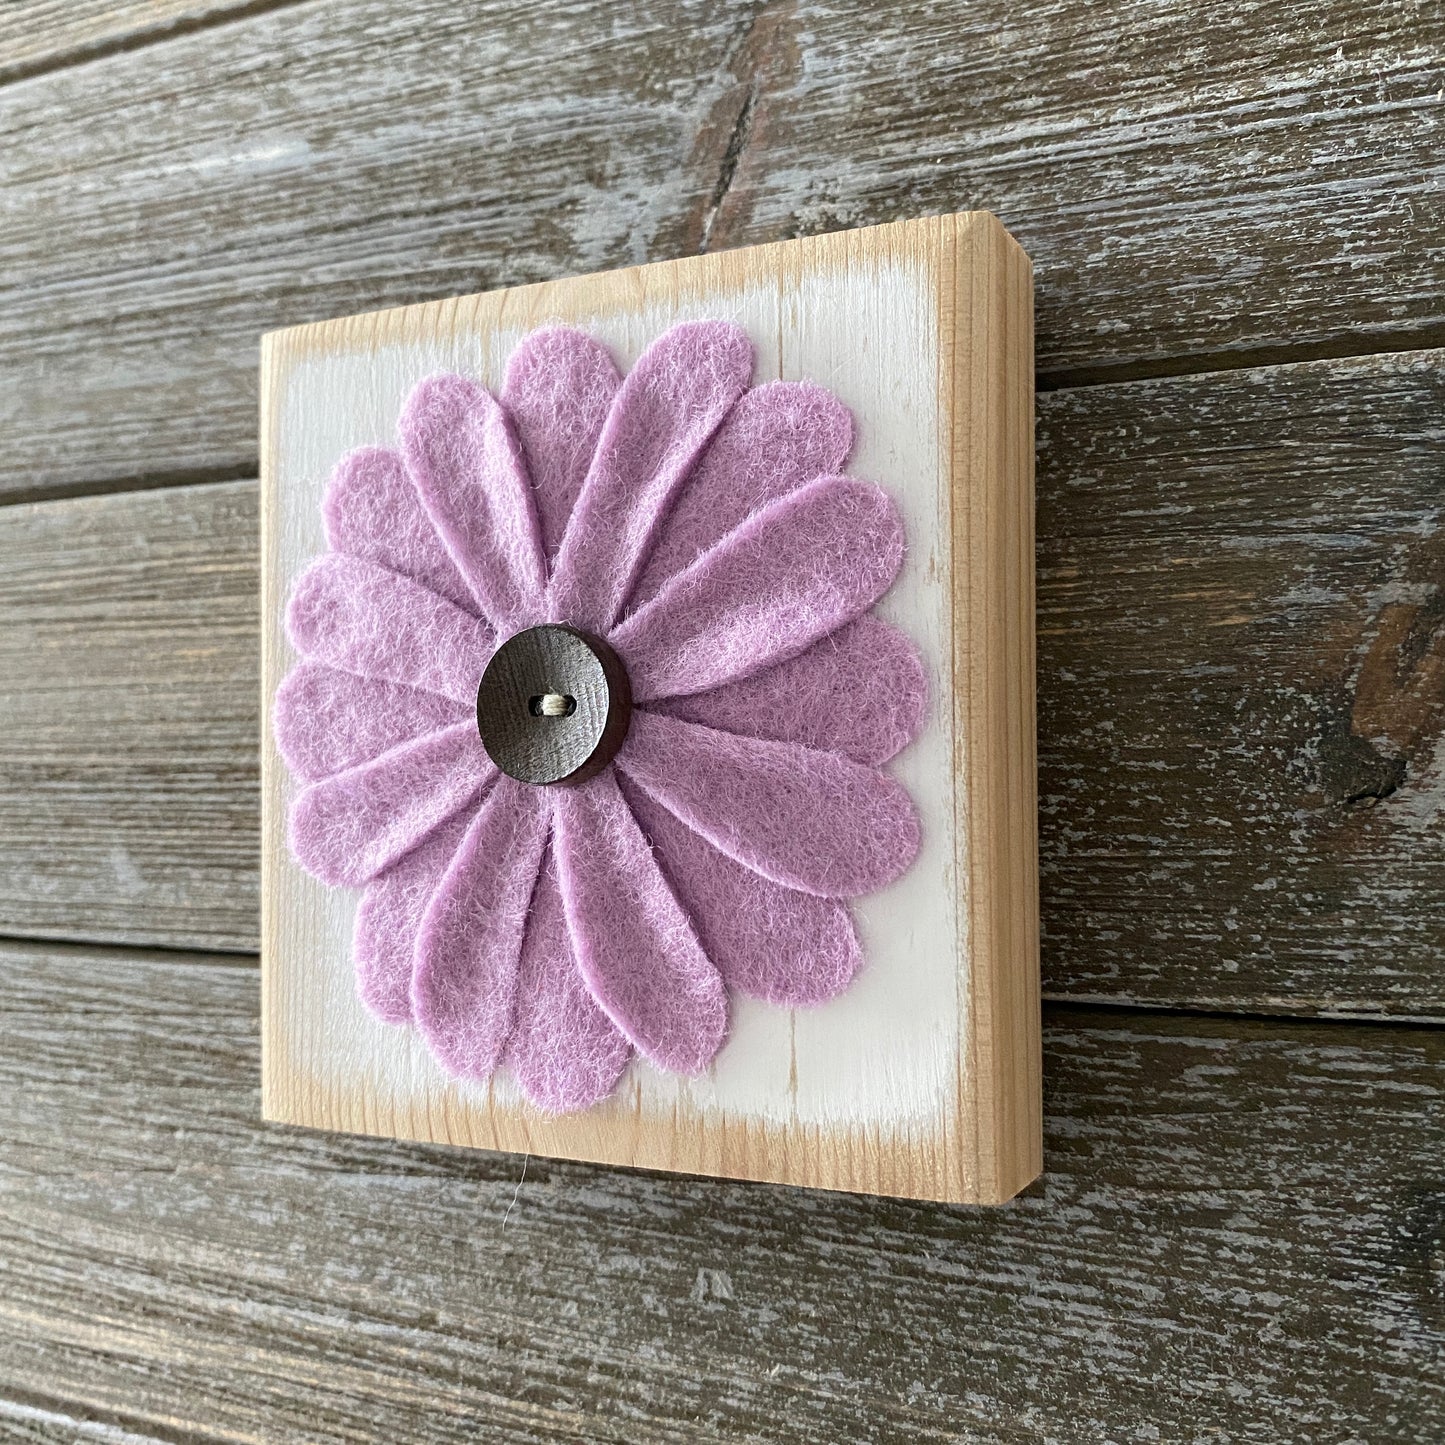 Felt Flower Decor - White and Purple